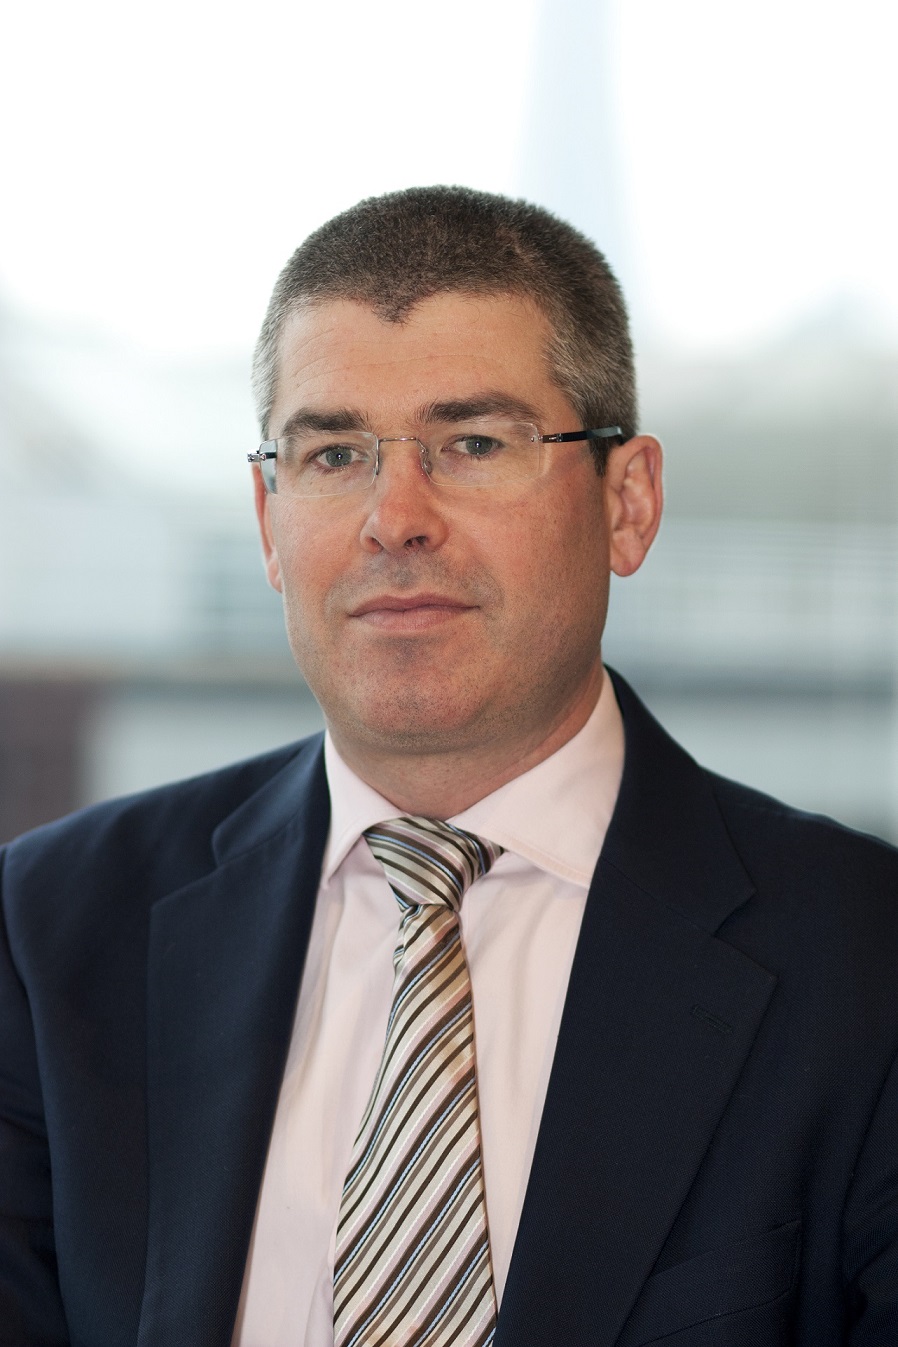 Simon Webber, Lead Portfolio Manager, Schroders